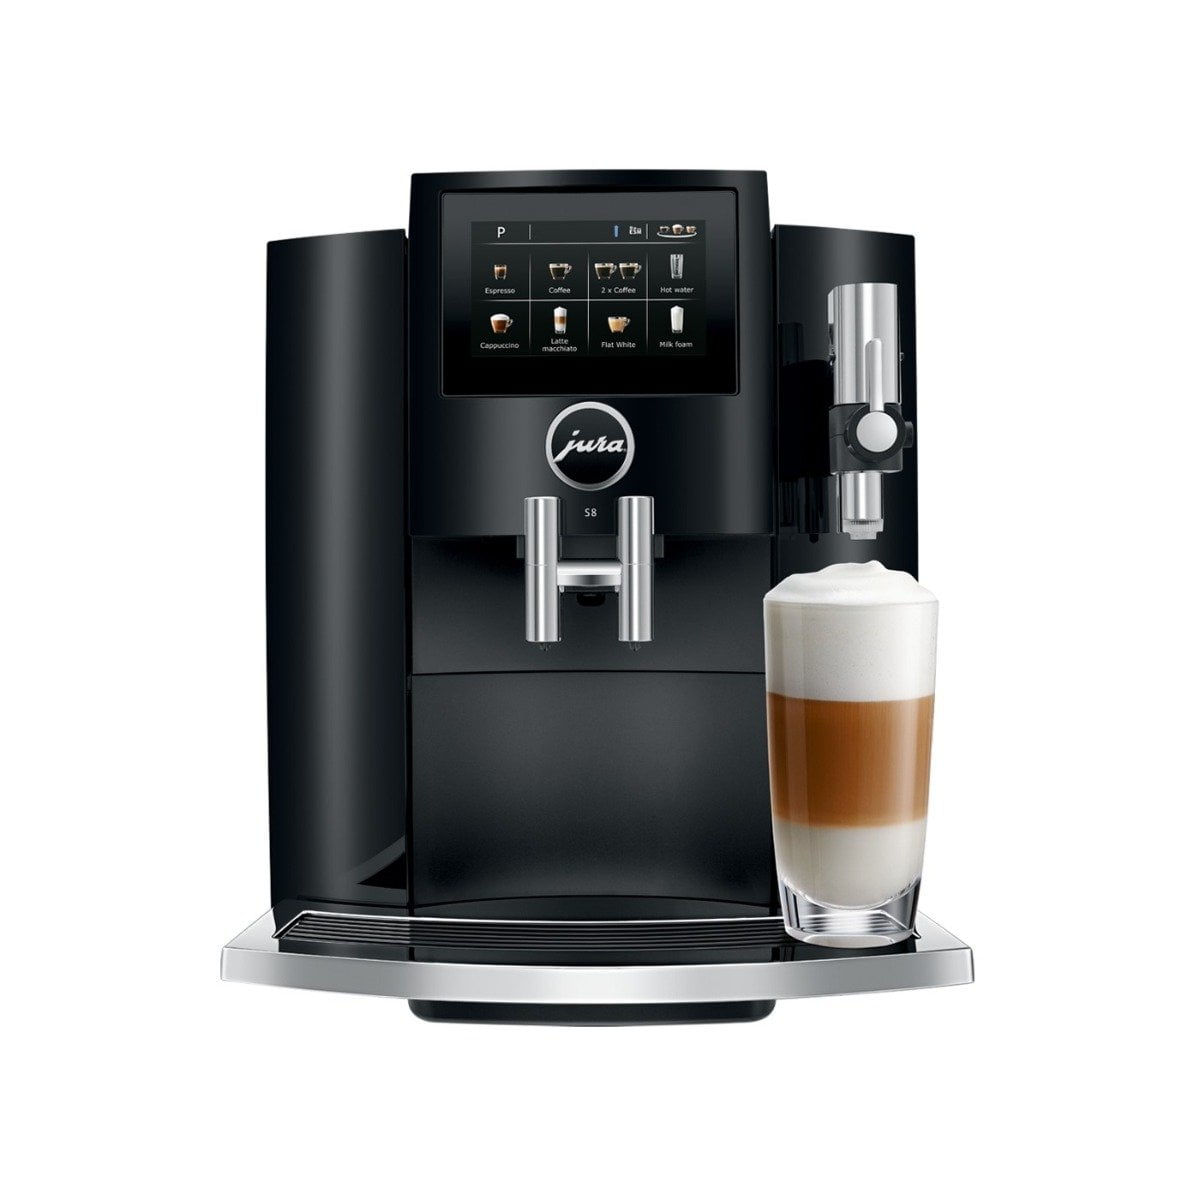 Drama hoofdpijn verzoek Jura S8 Multifunction Automatic Coffee & Espresso Machine | Piano Black -  Walmart.com